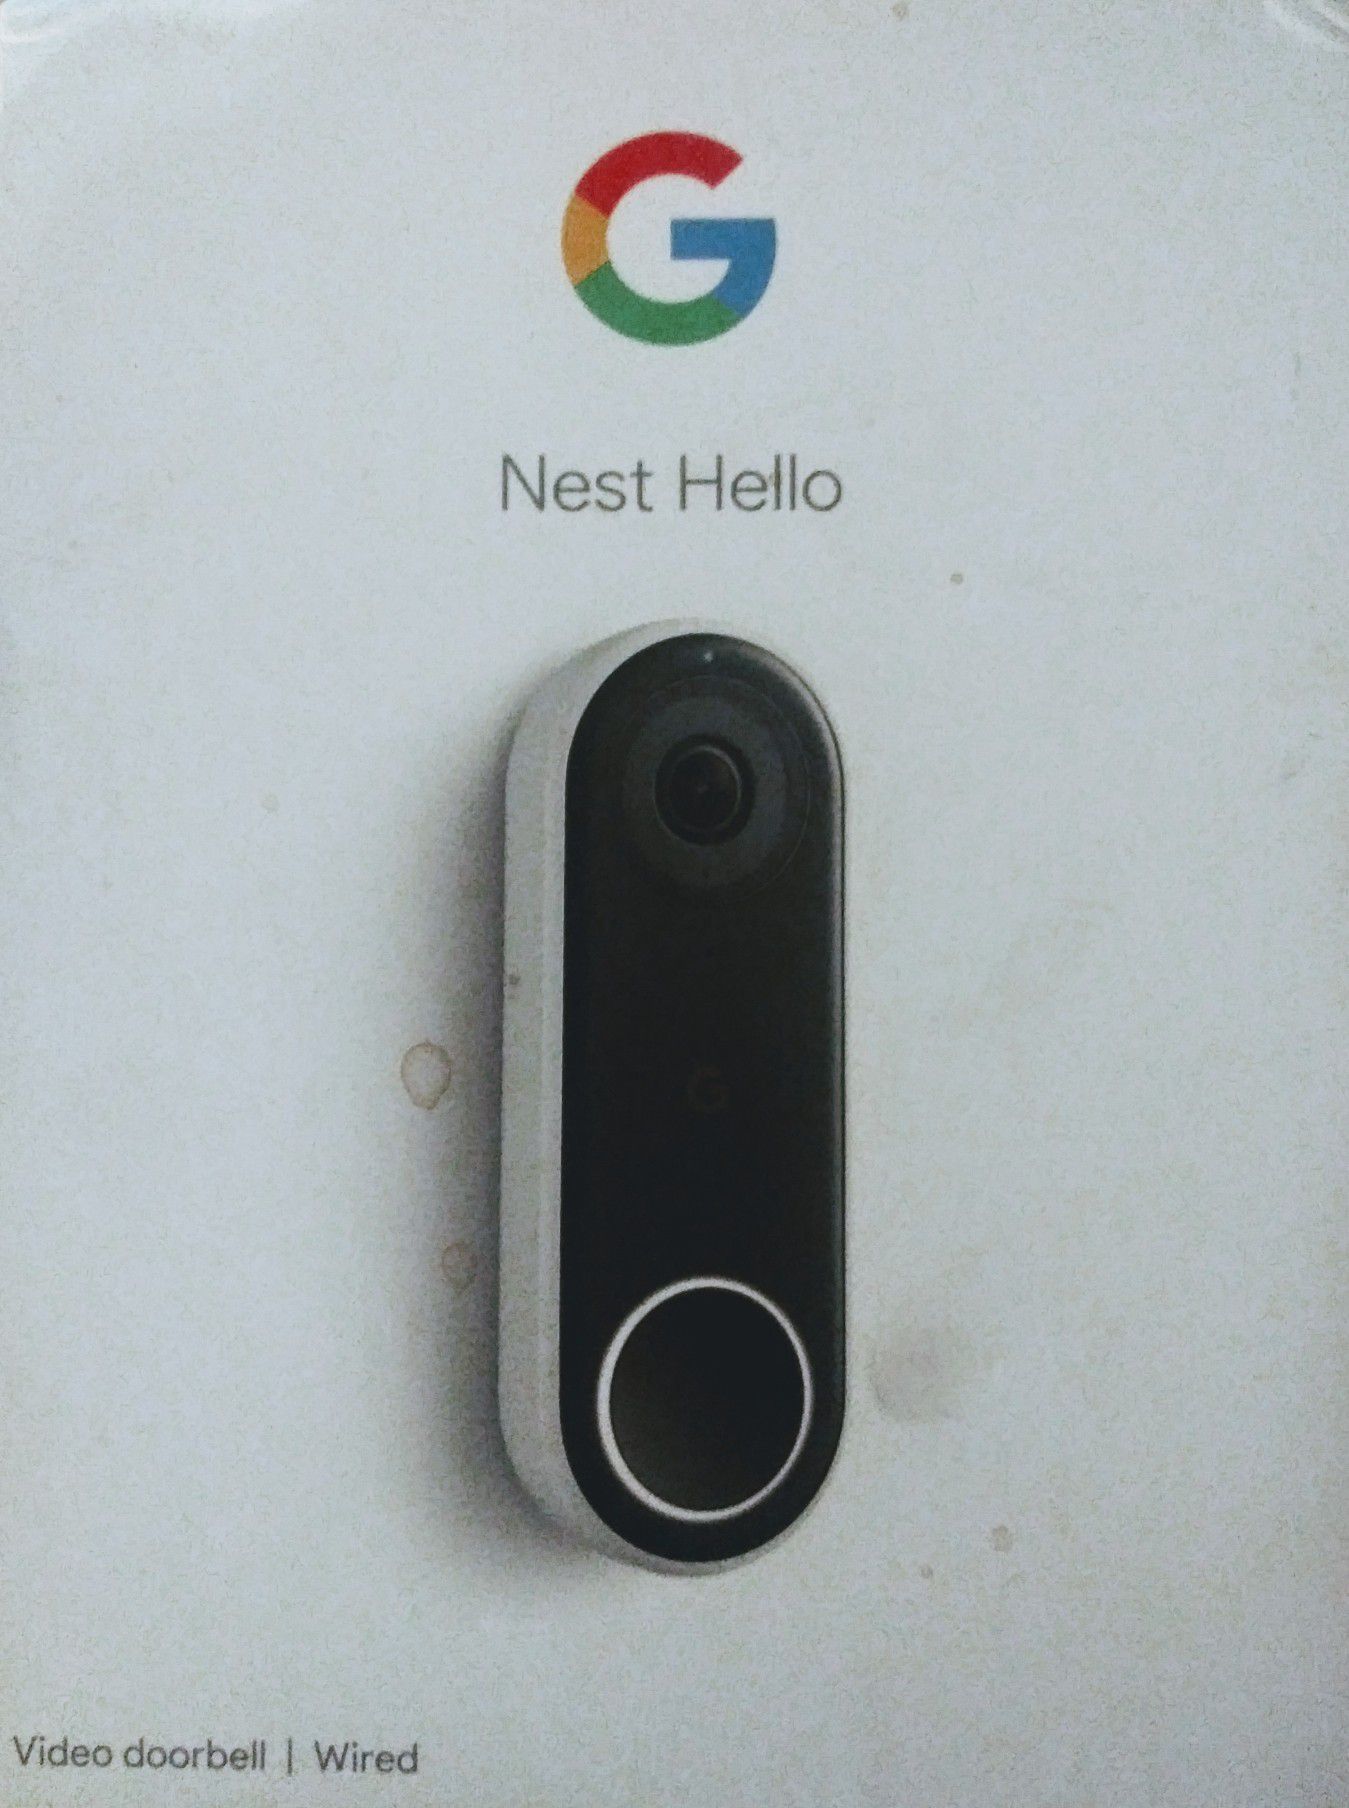 Google Nest Hello Video doorbell / Wired